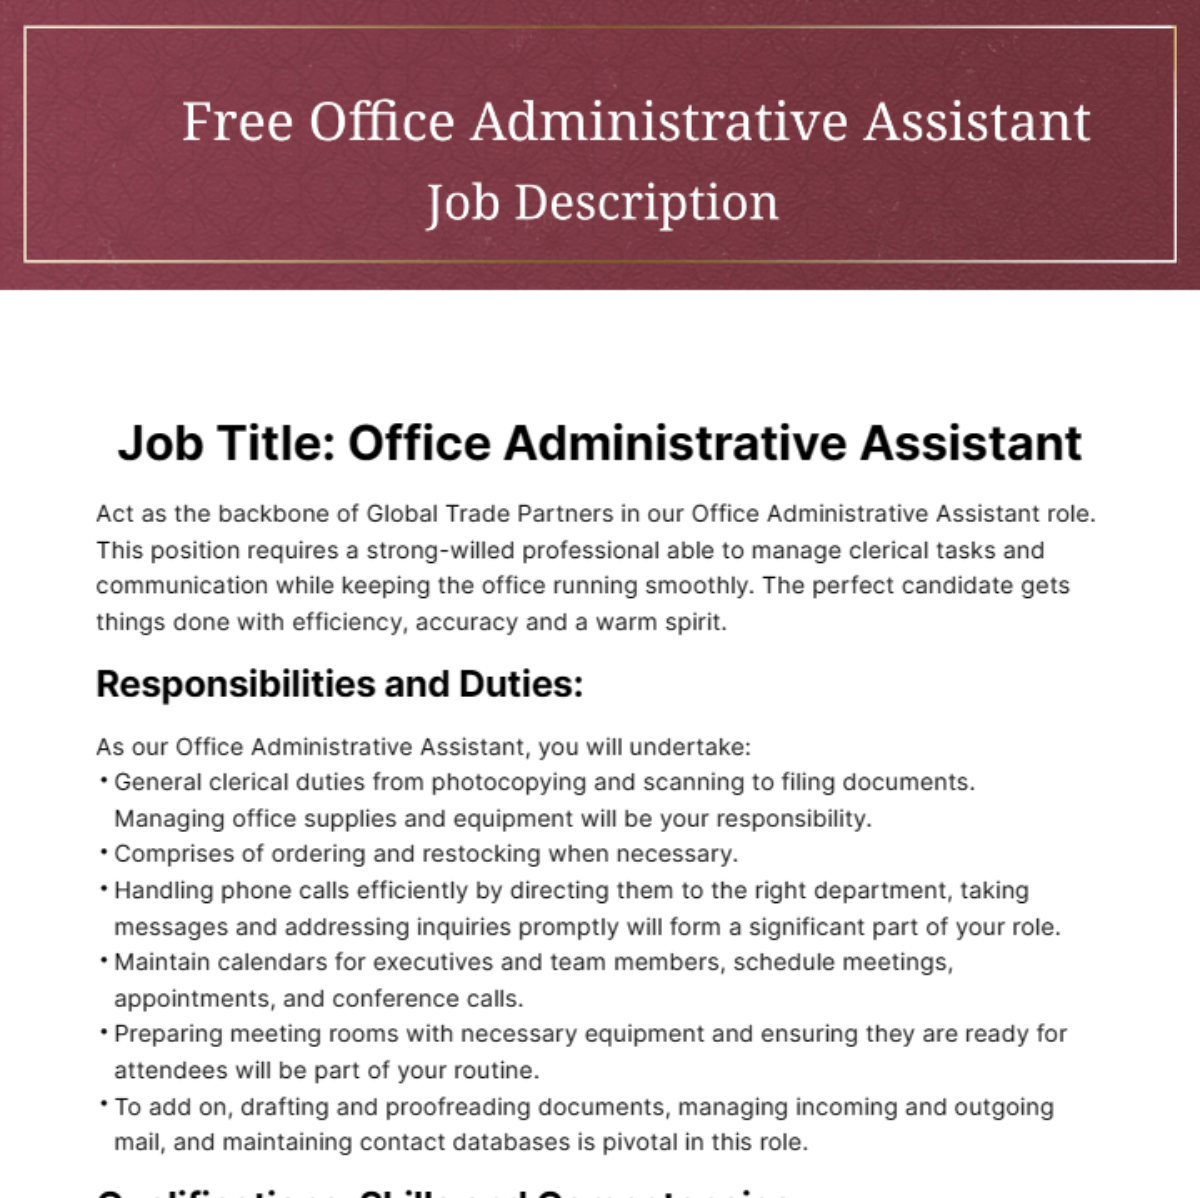 Free Office Administrative Assistant Job Description Template